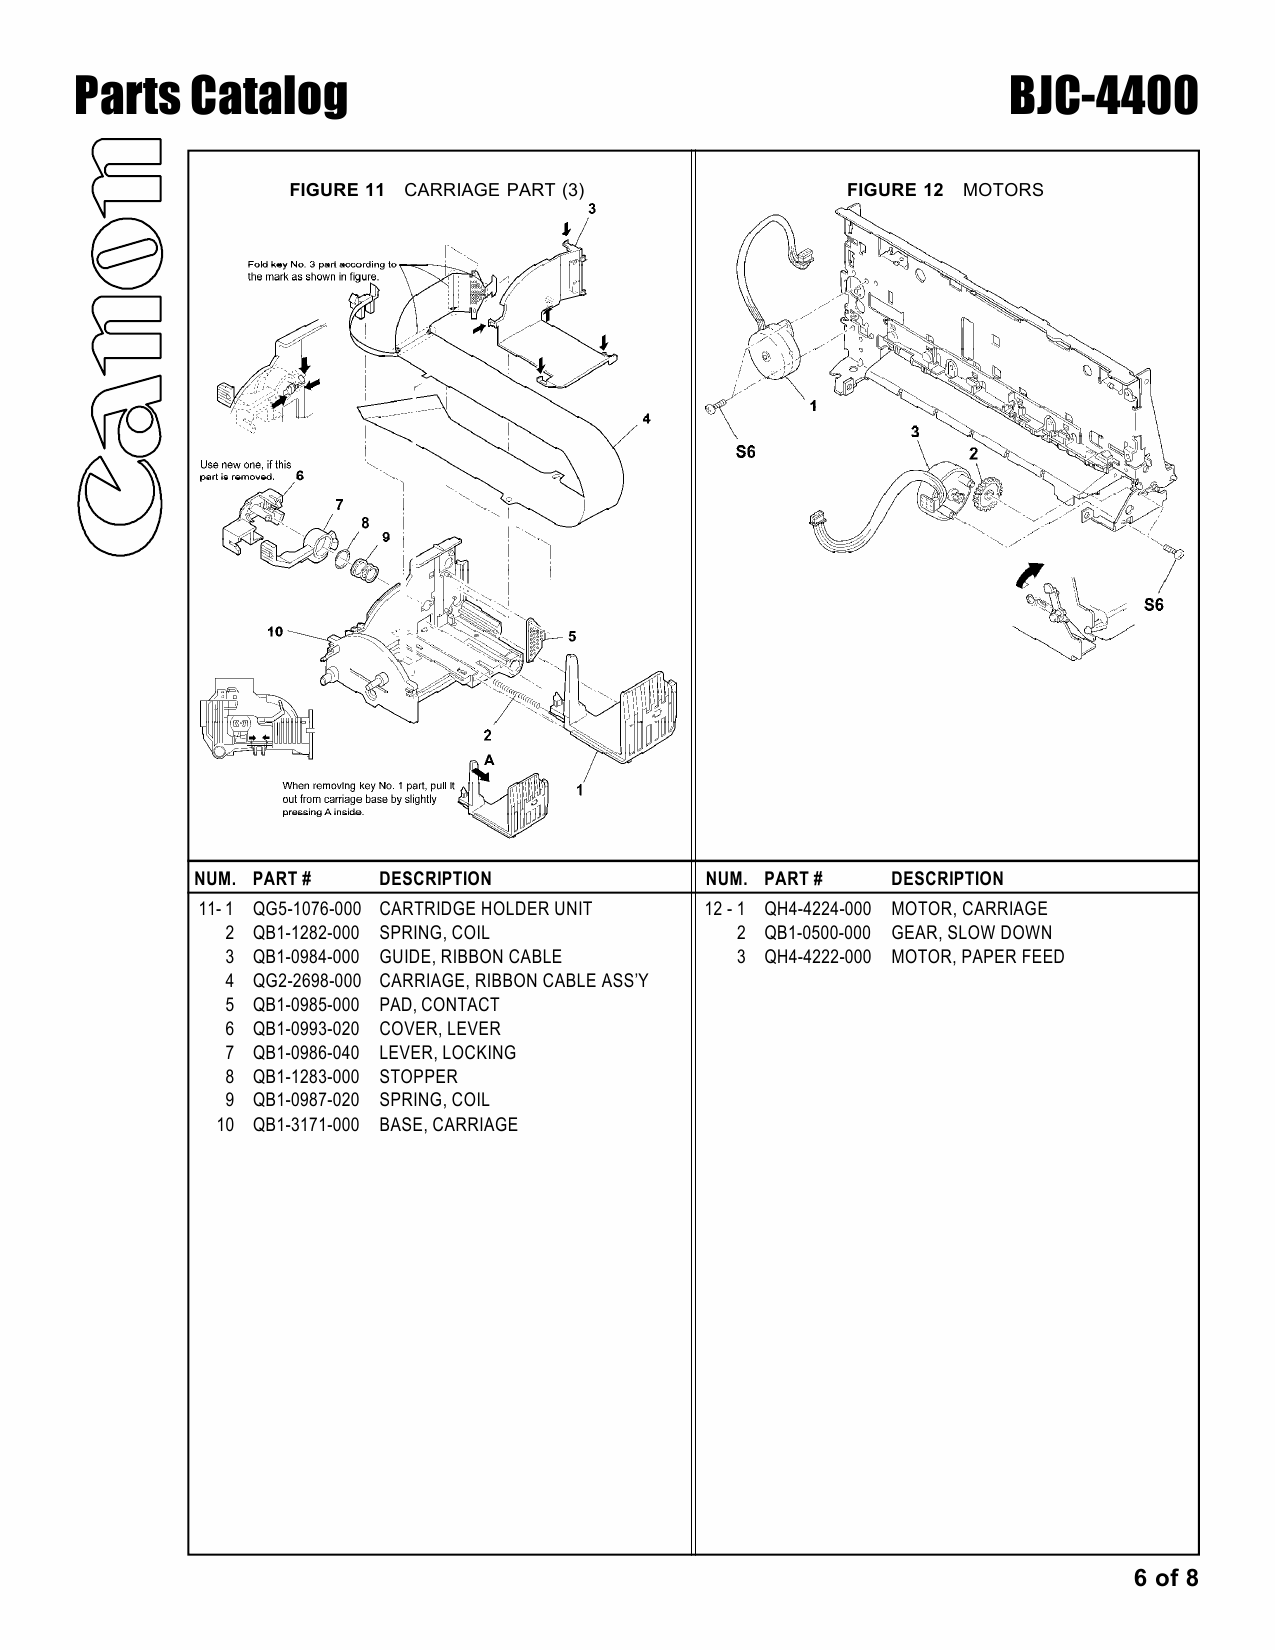 Canon BubbleJet BJC-4400 Parts Catalog Manual-6